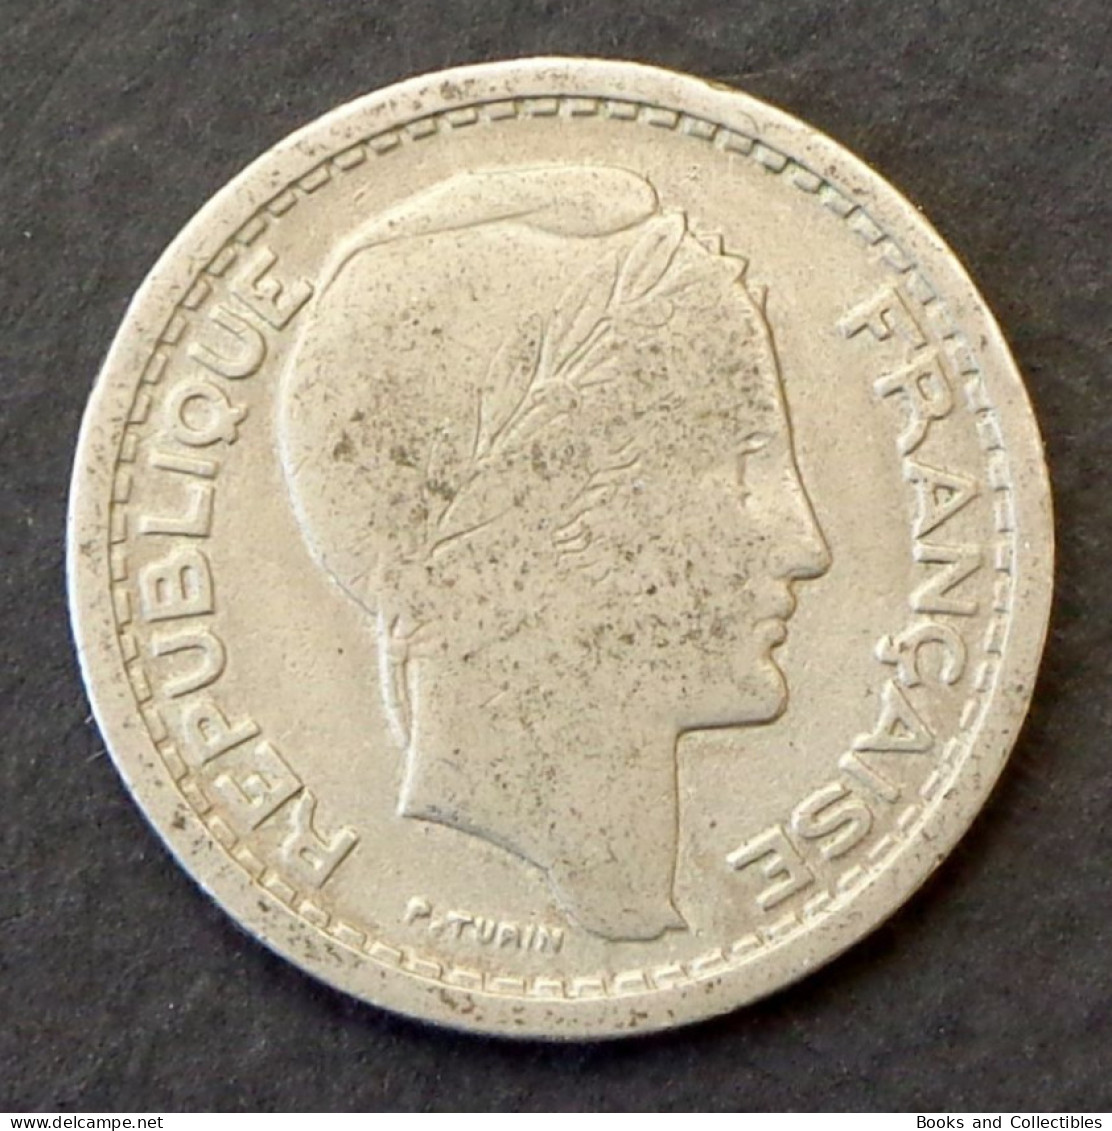 ALGERIA - 20 Francs 1949 - KM# 91 * Ref. 0190 - Algerien